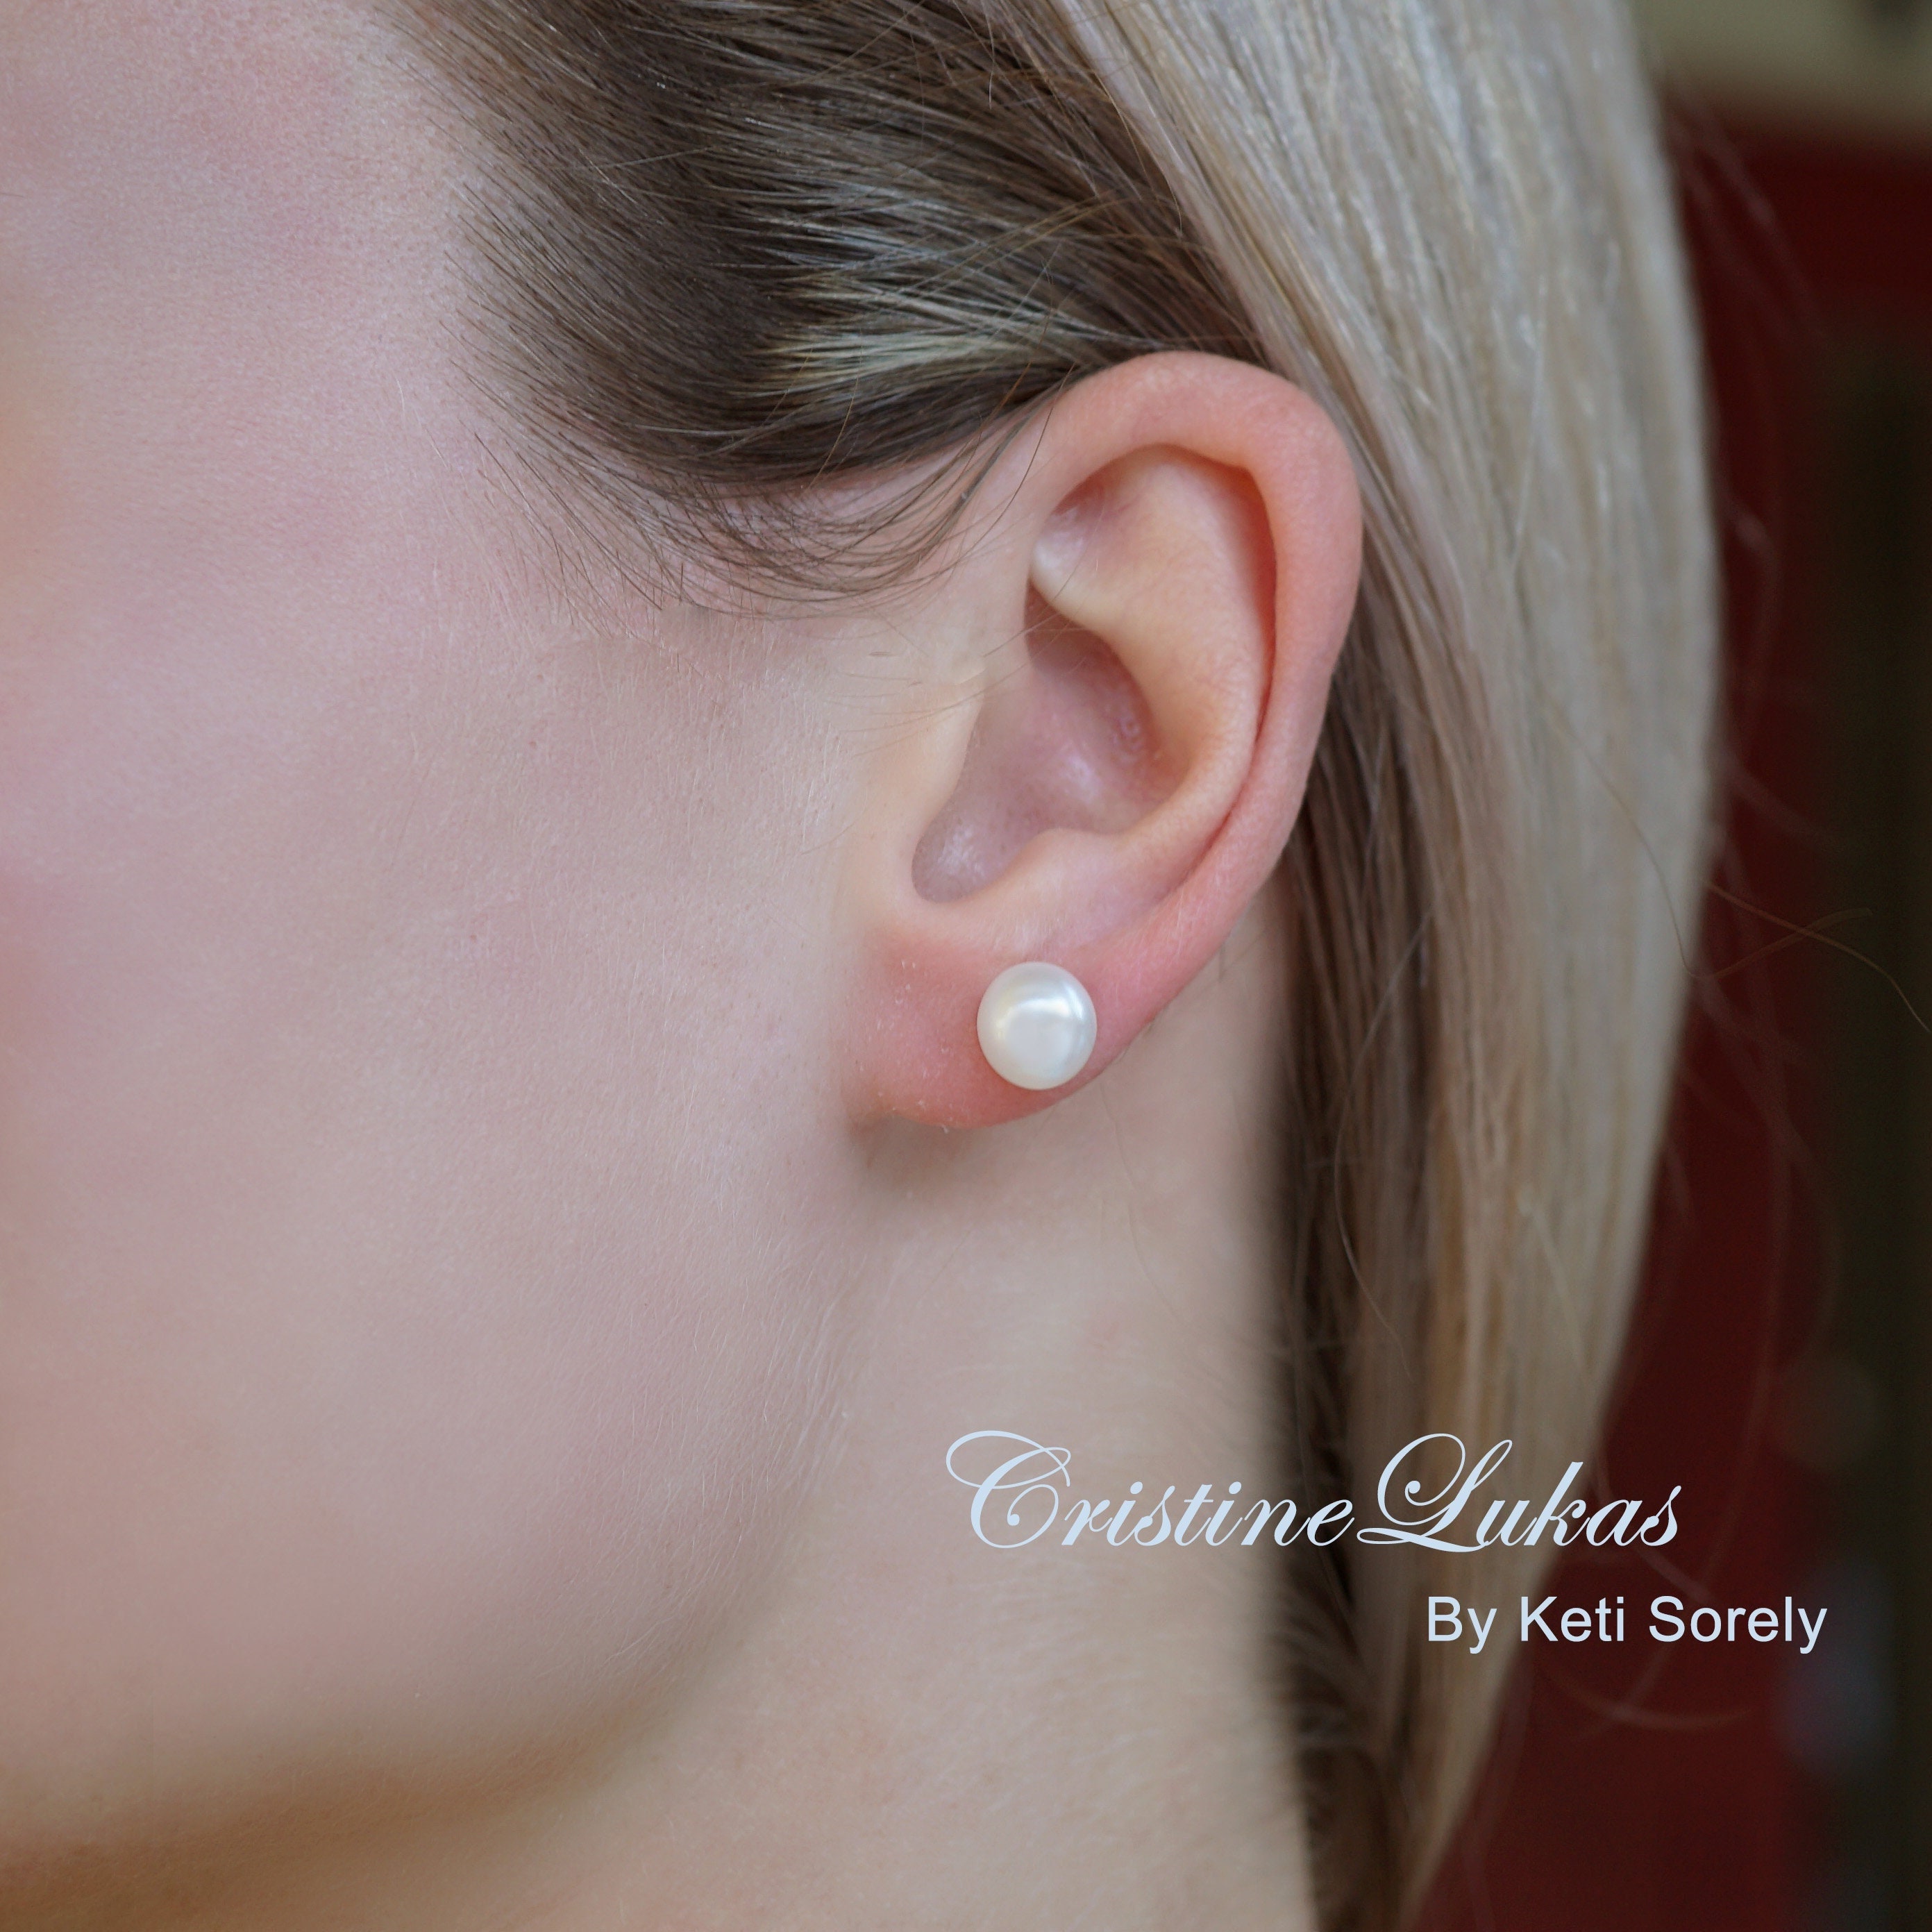 Girl's Solitaire Heart Push Back Sterling Silver Earrings - In Season  Jewelry : Target